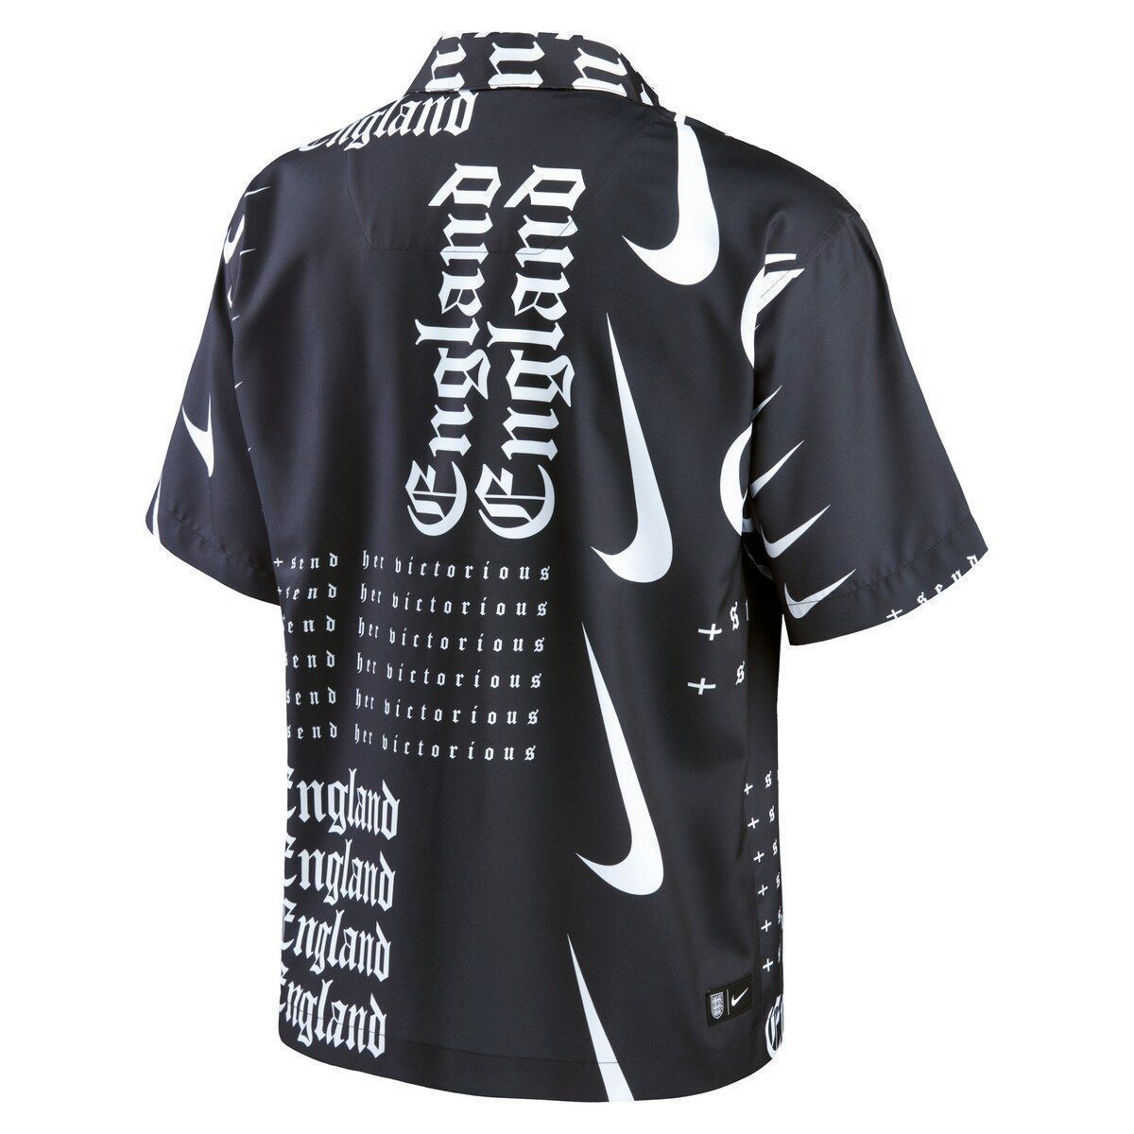 Nike Men's Black England Women's National Team Button-Up Shirt - Image 4 of 4